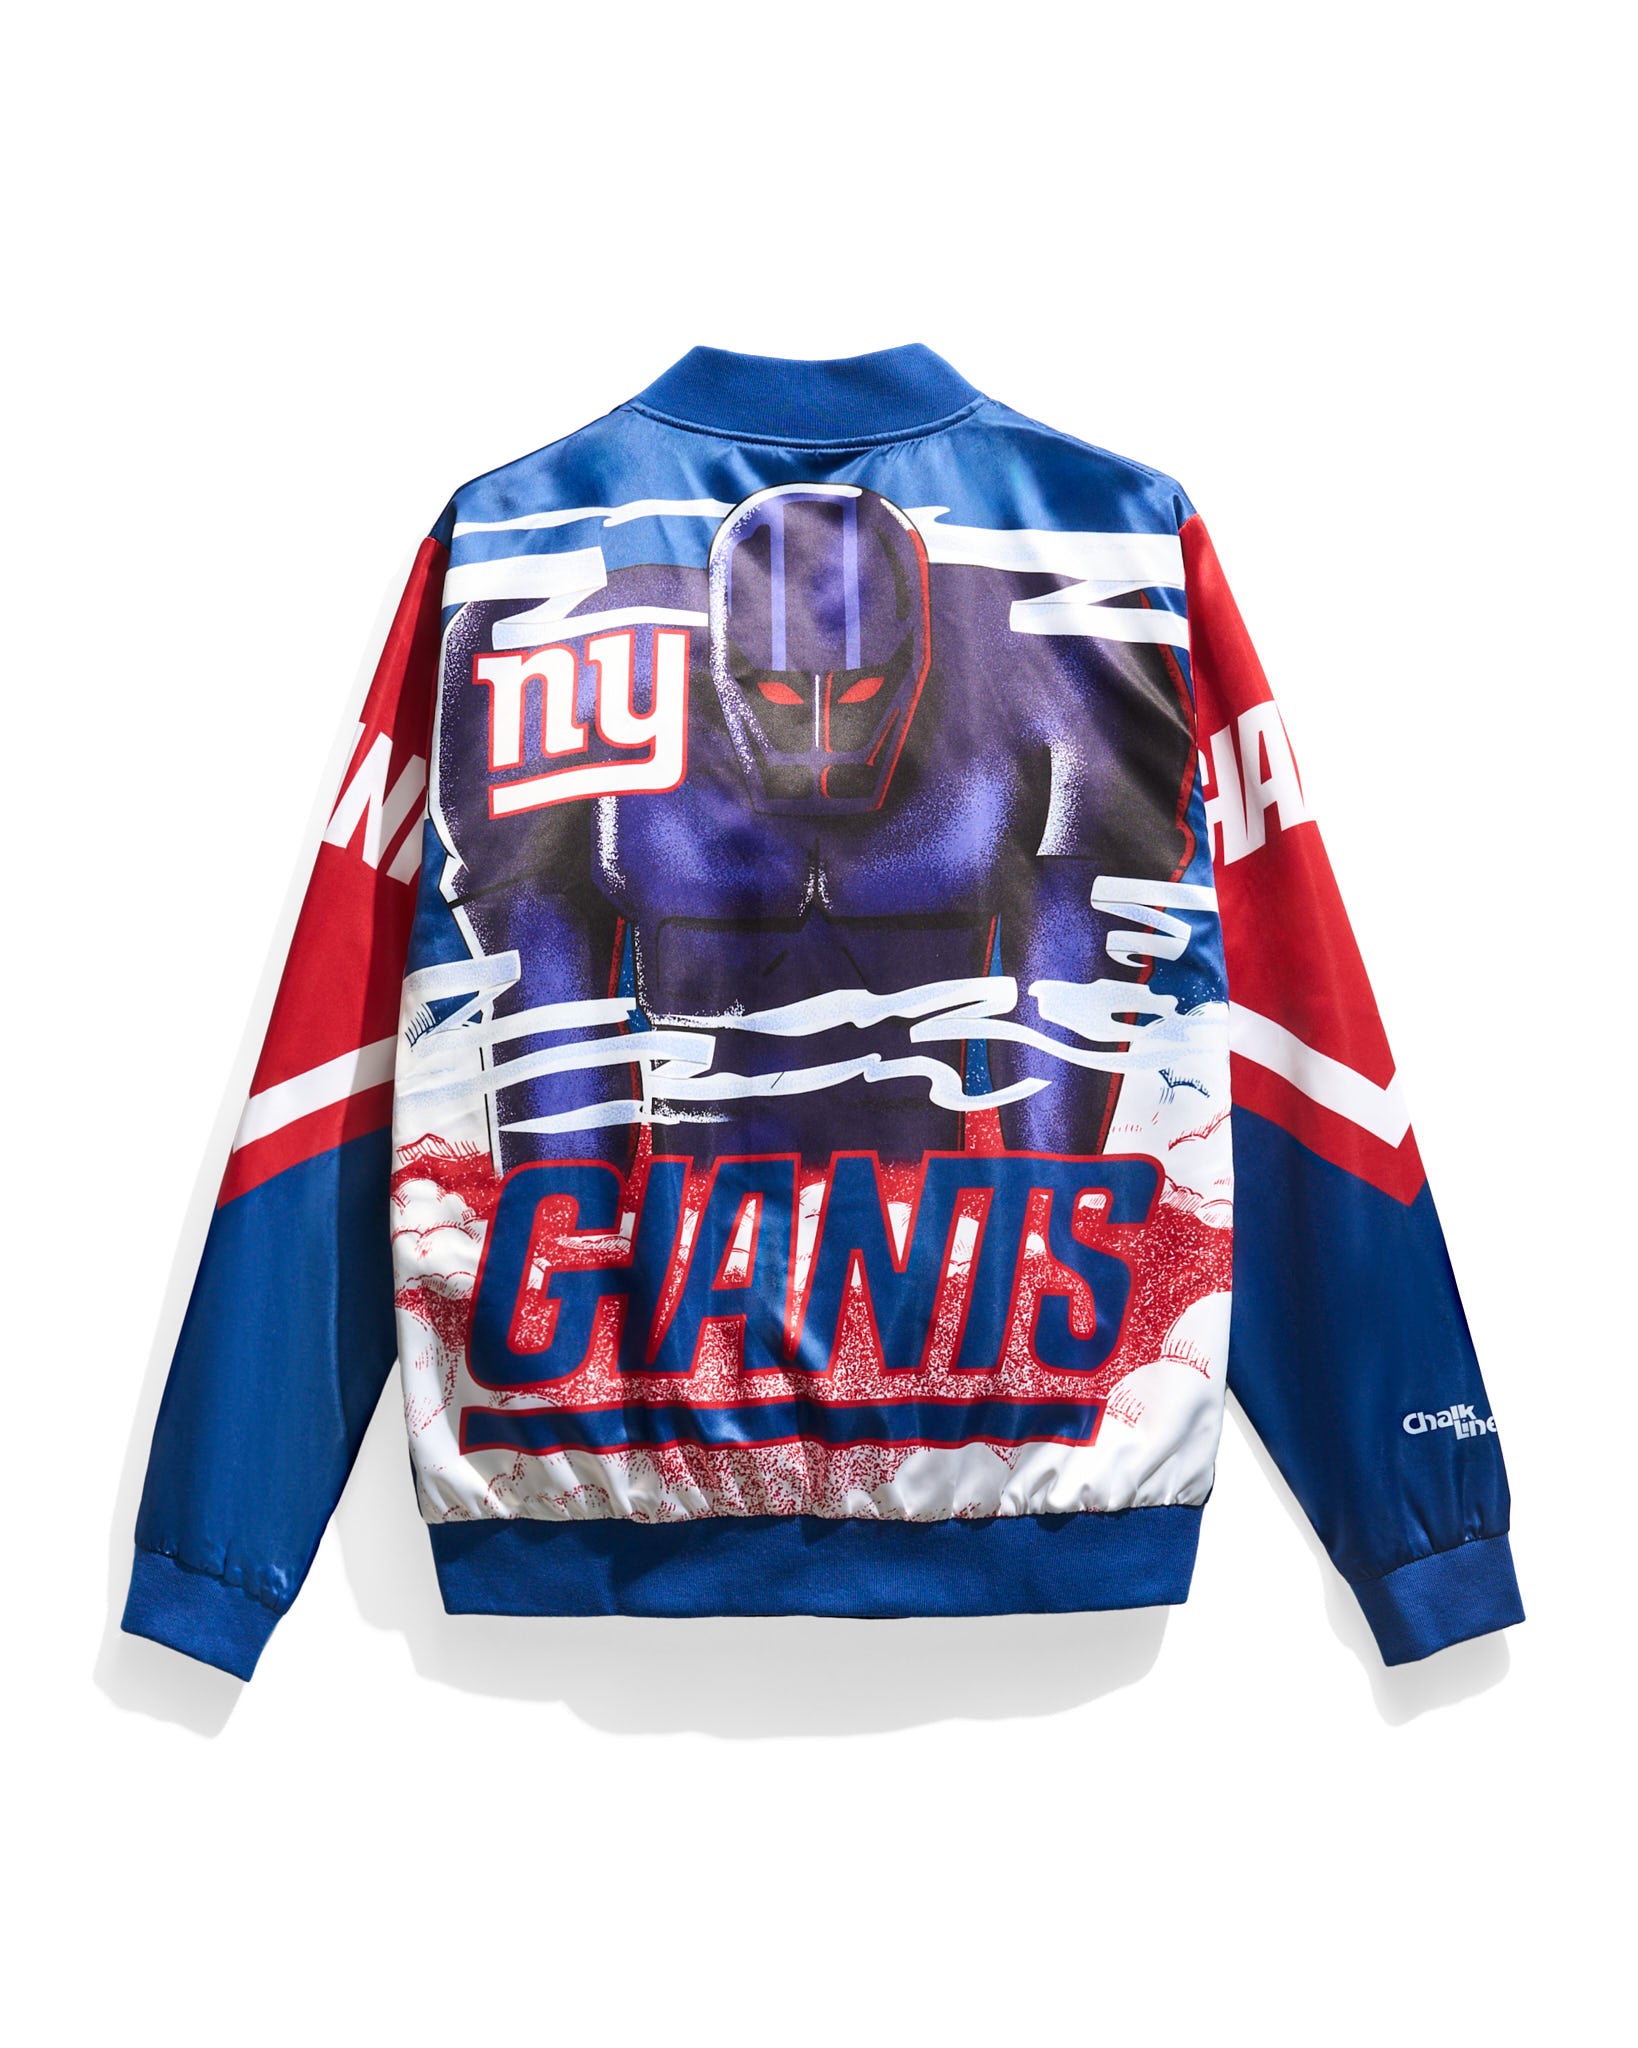 New York Giants Red/Blue Satin Jacket